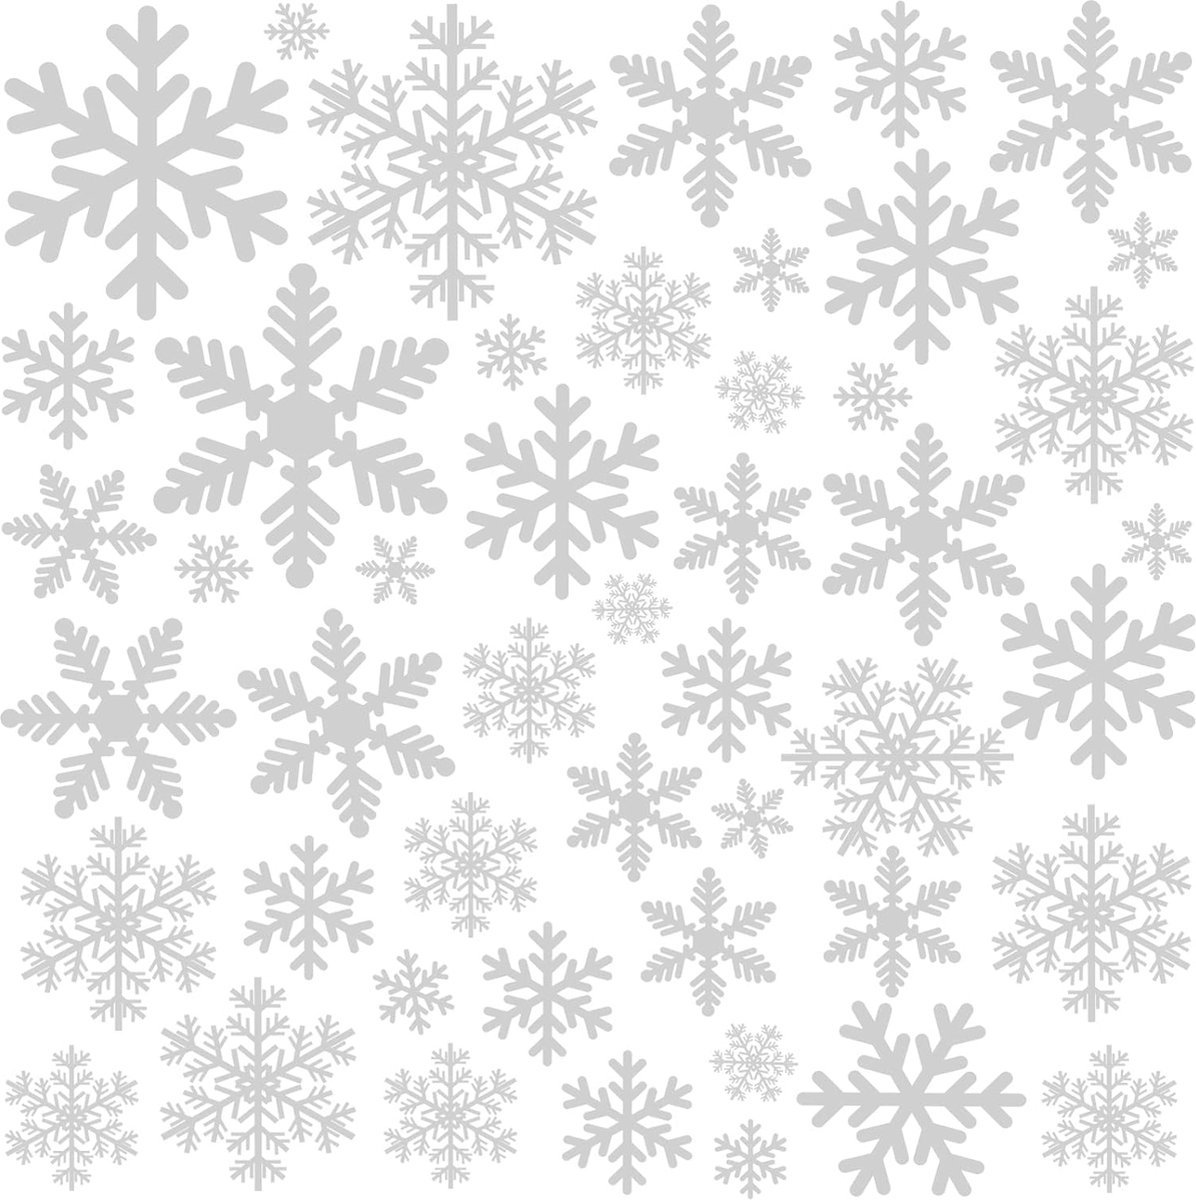 Raamstickers sneeuwvlokken - Wit - 156 stuks - Zelfklevend - Kerstmis/winter raamfolie - Sneeuw stickers - Raamfolie - Sterren